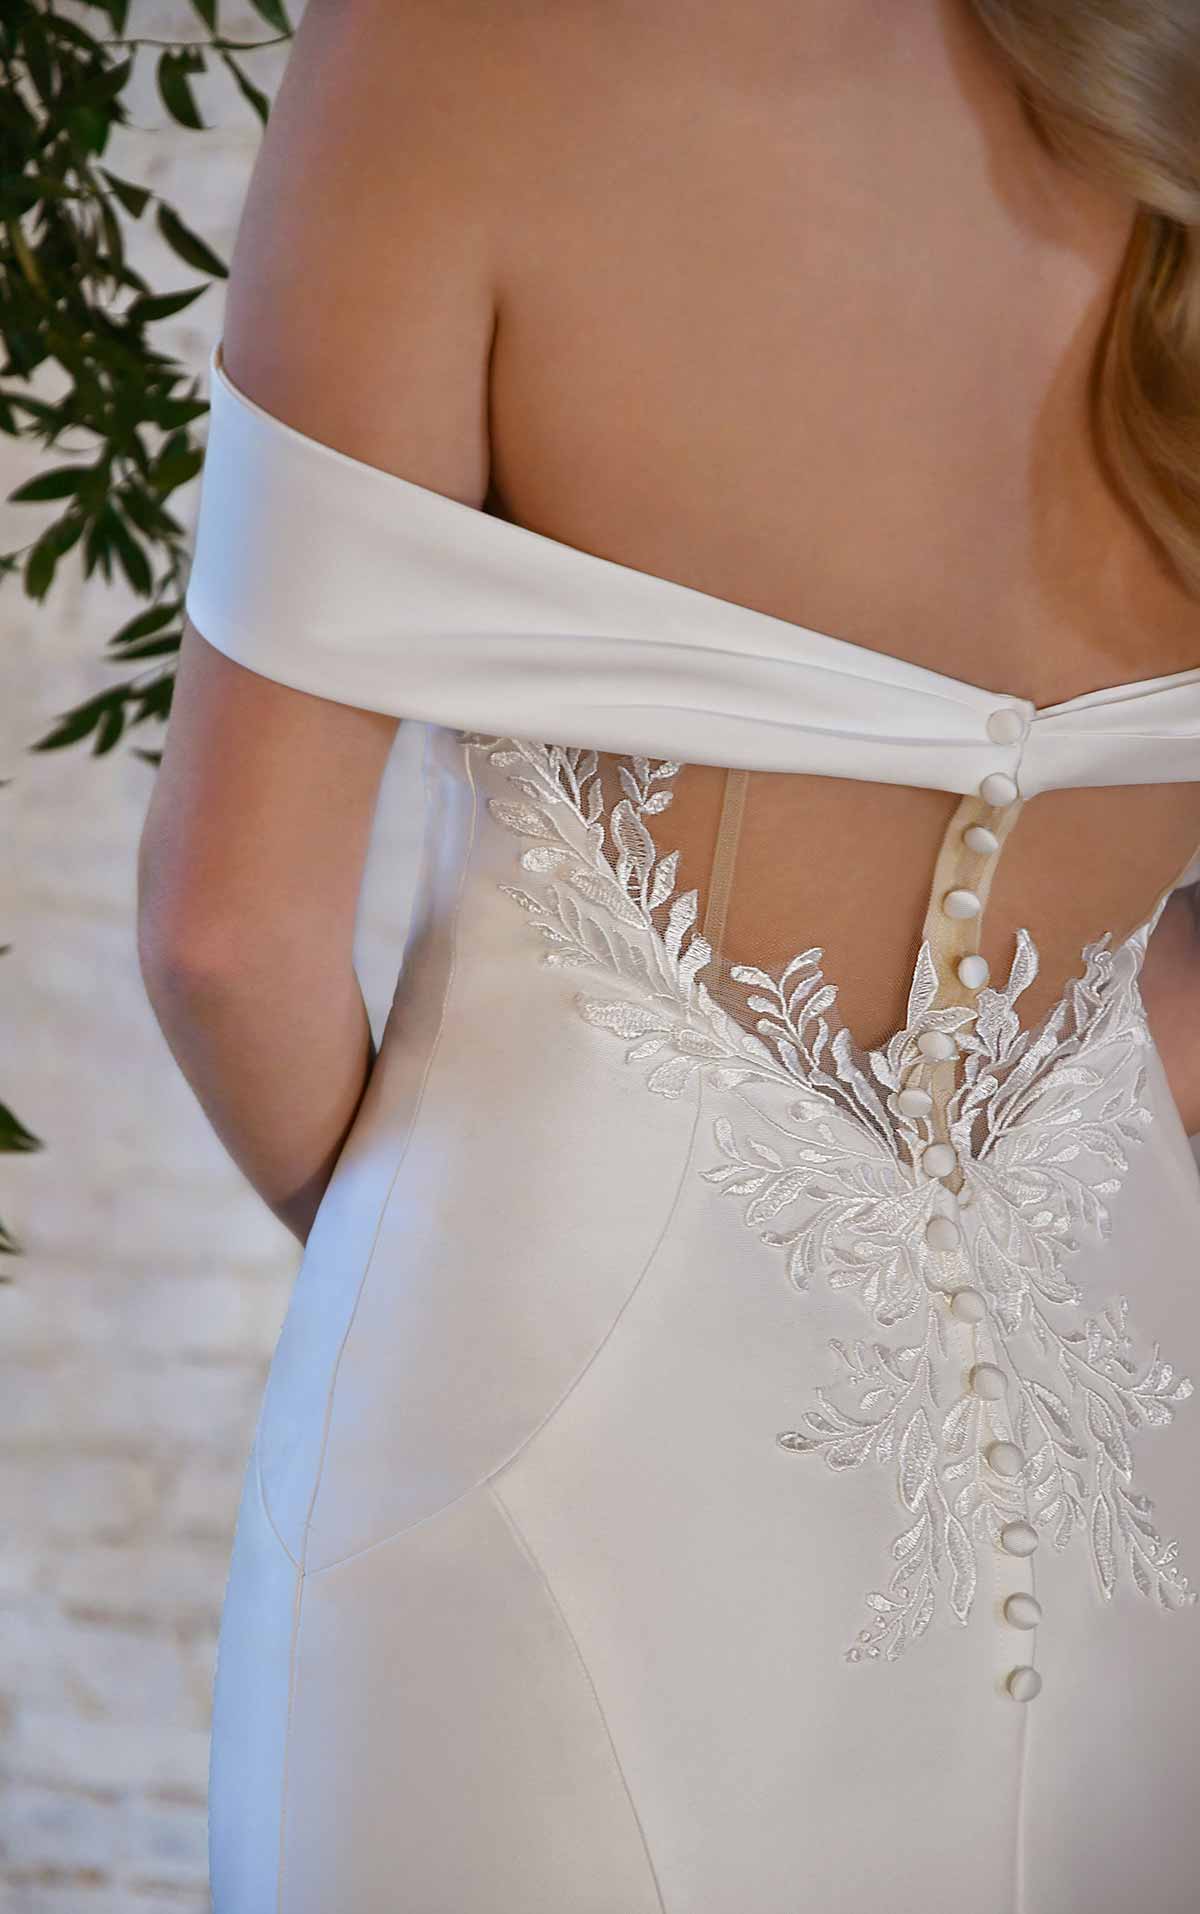 7363 Sweetheart Neckline Wedding Dress with Off-the-Shoulder Straps by Stella York